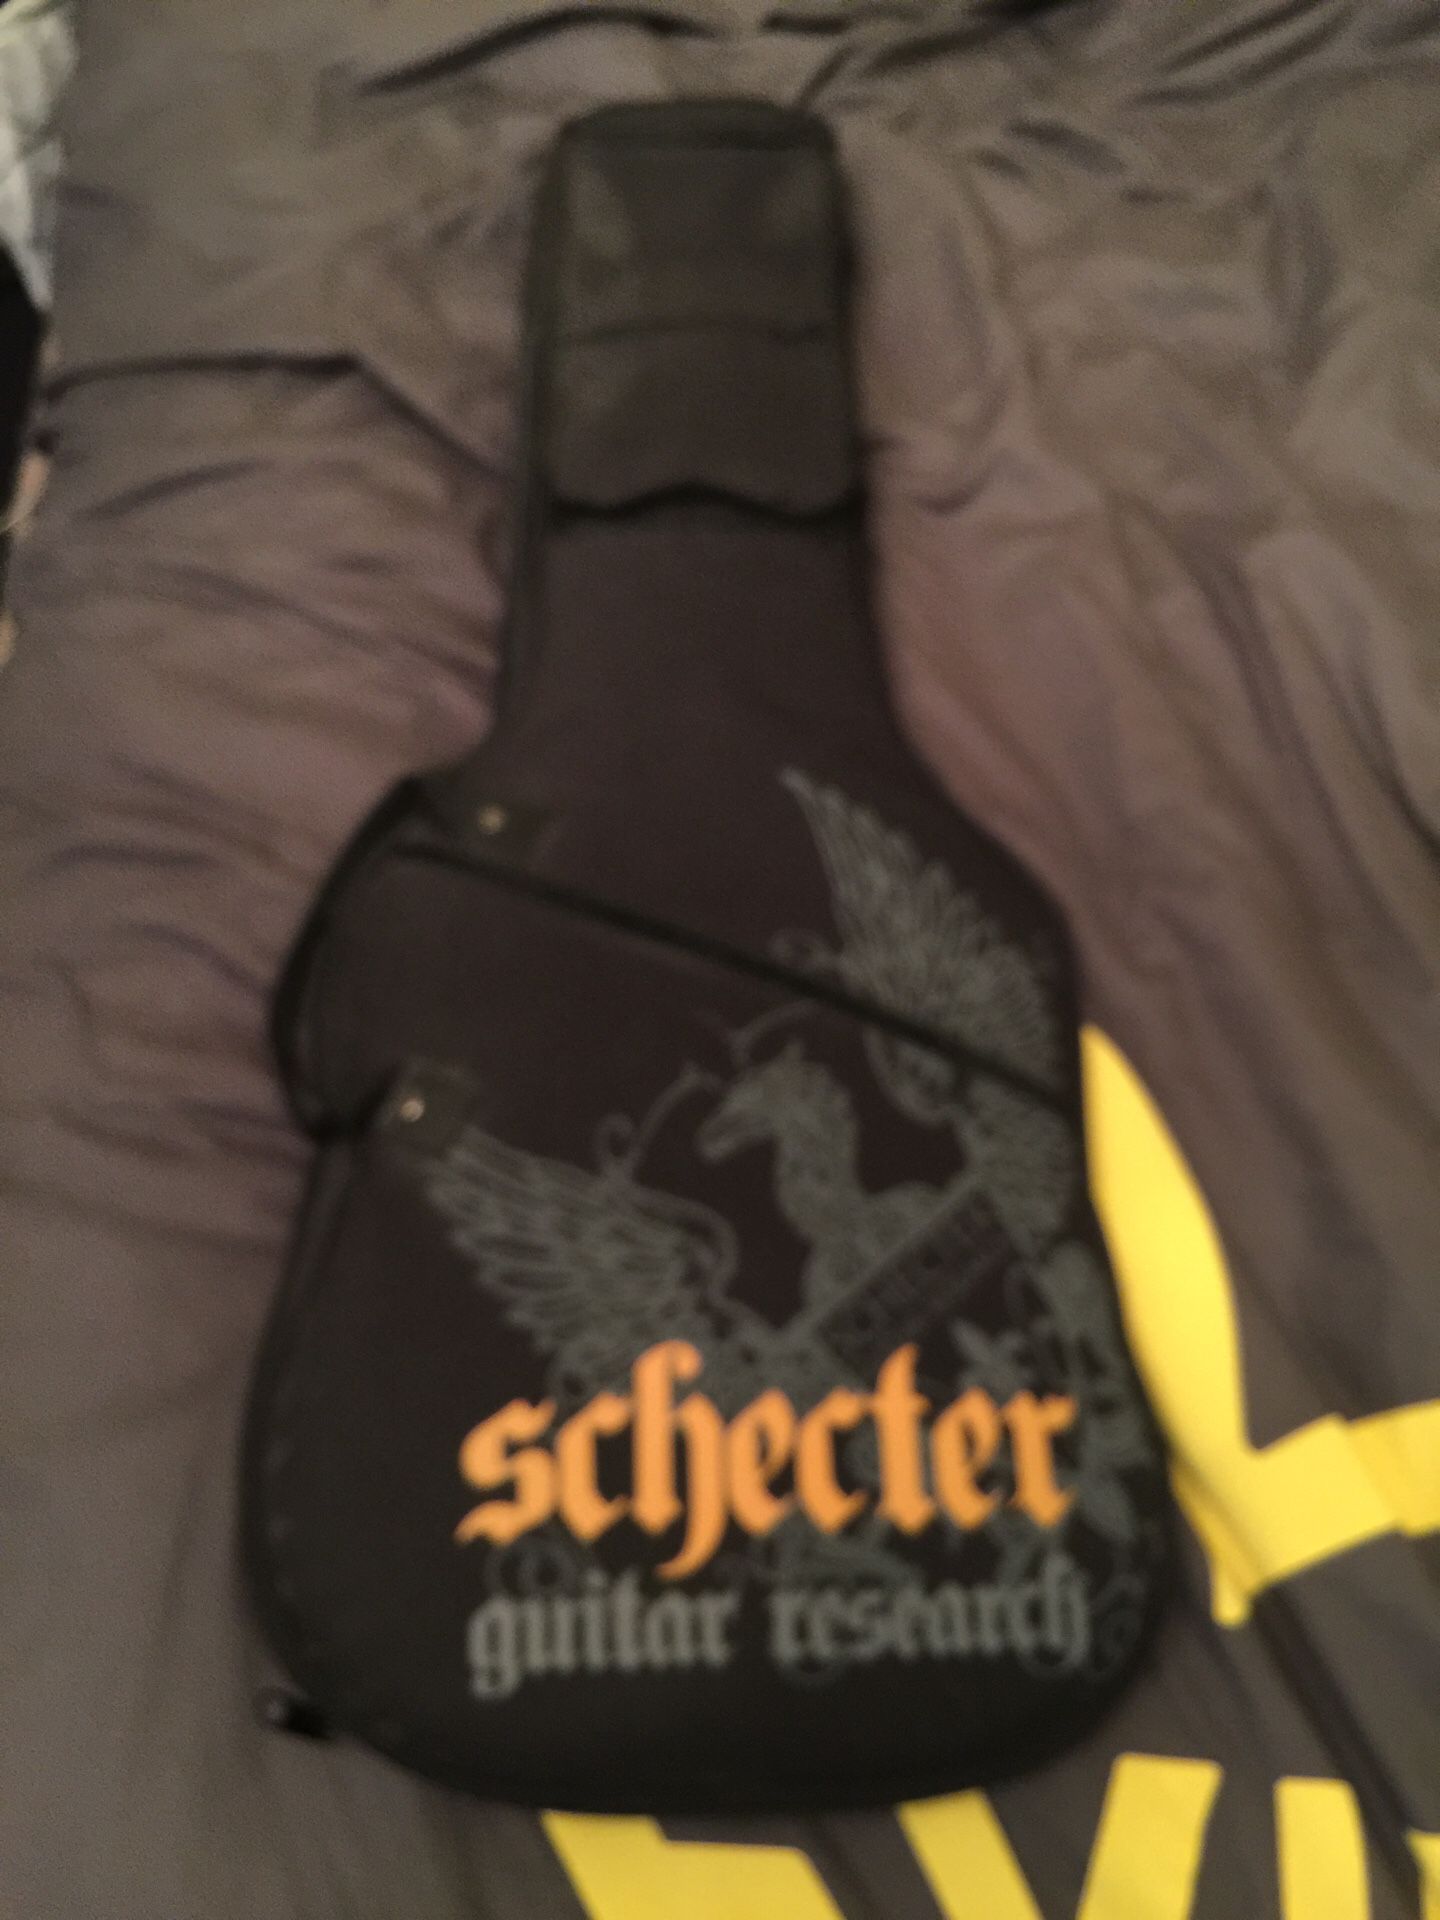 Schecter guitar bag - $60